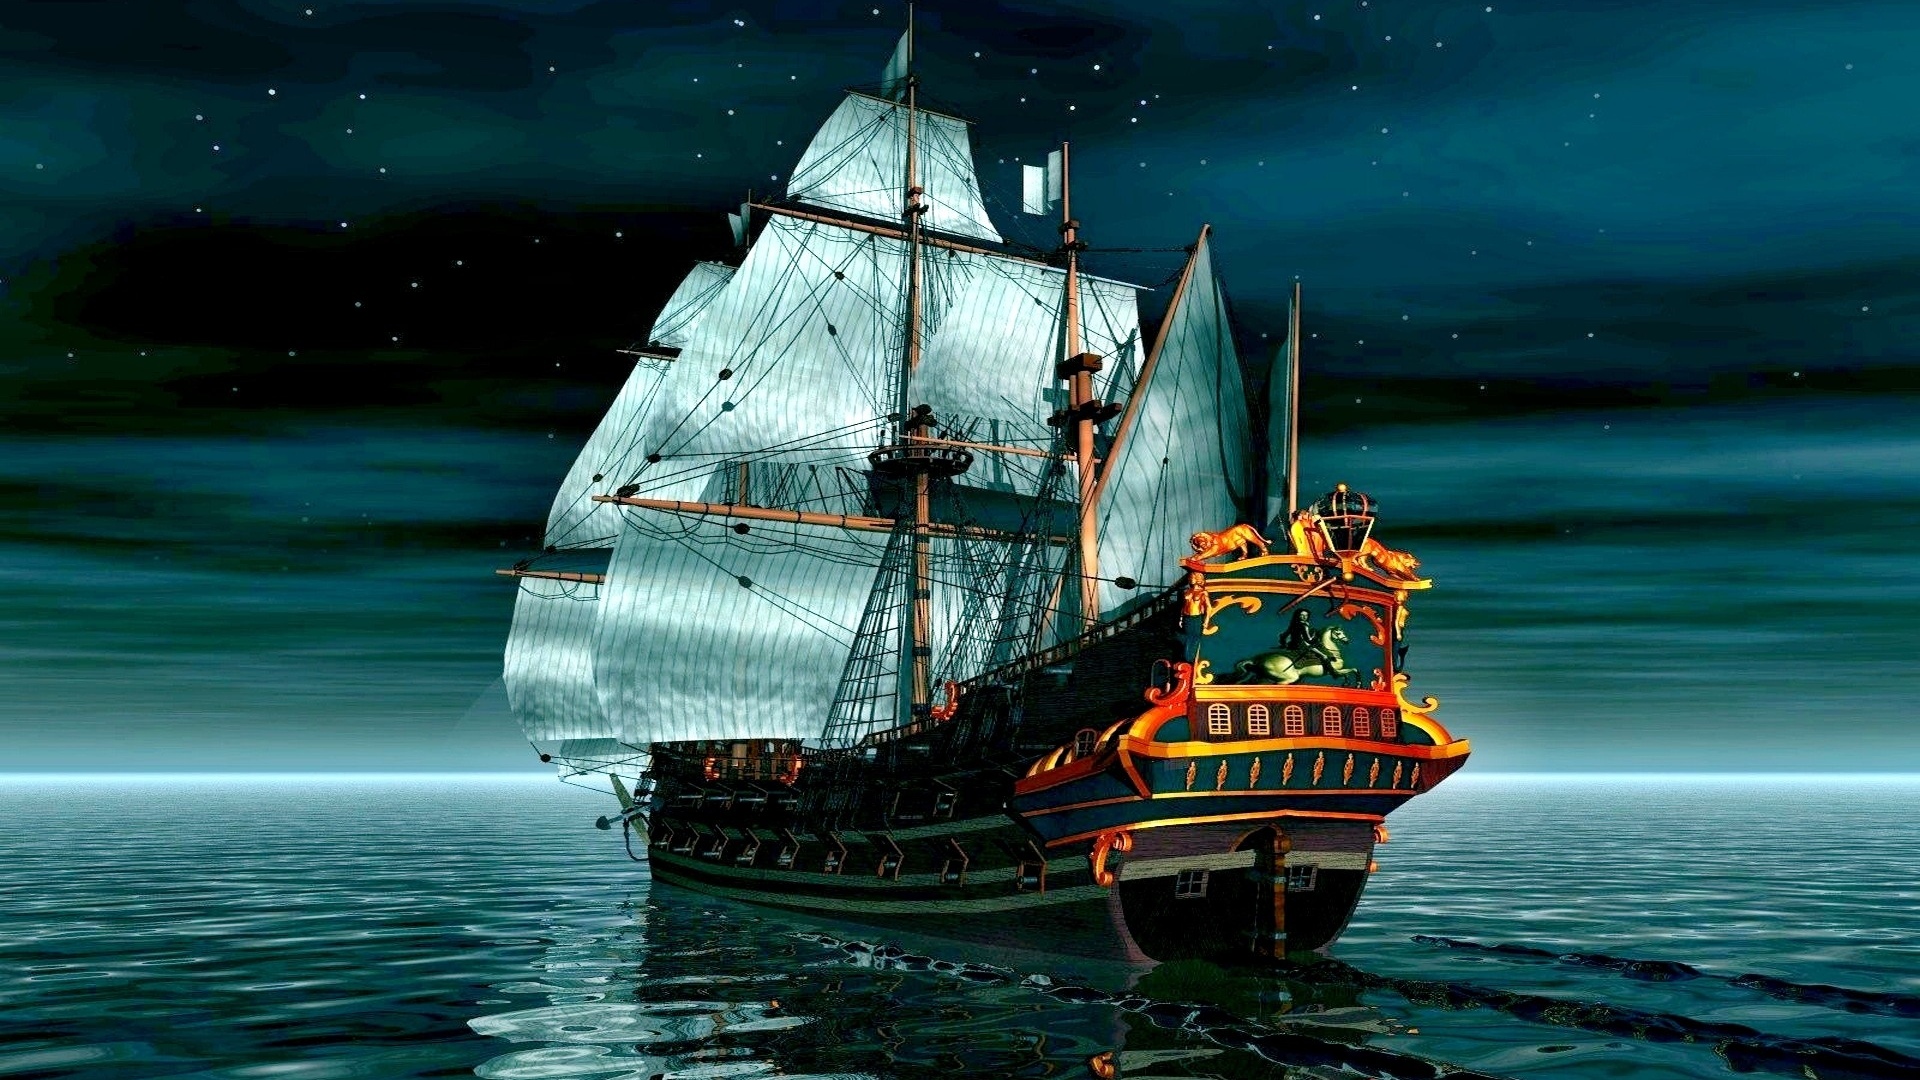 Sailing Ship Sea Moon Rays Night Digital Art 1920x1080